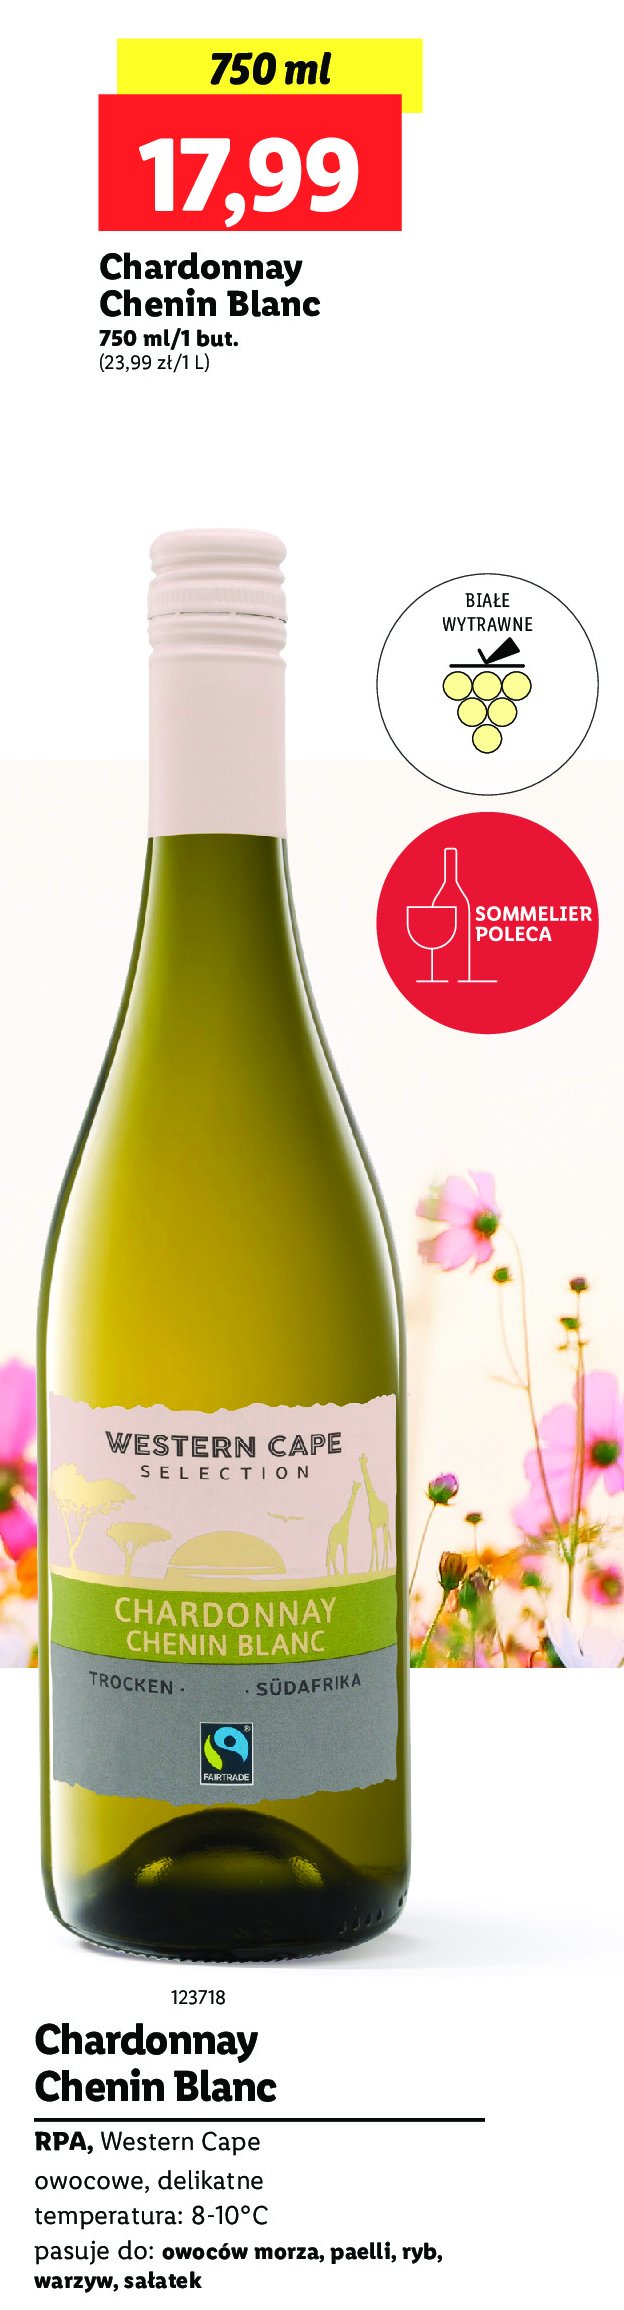 Wino Western cape selection promocja